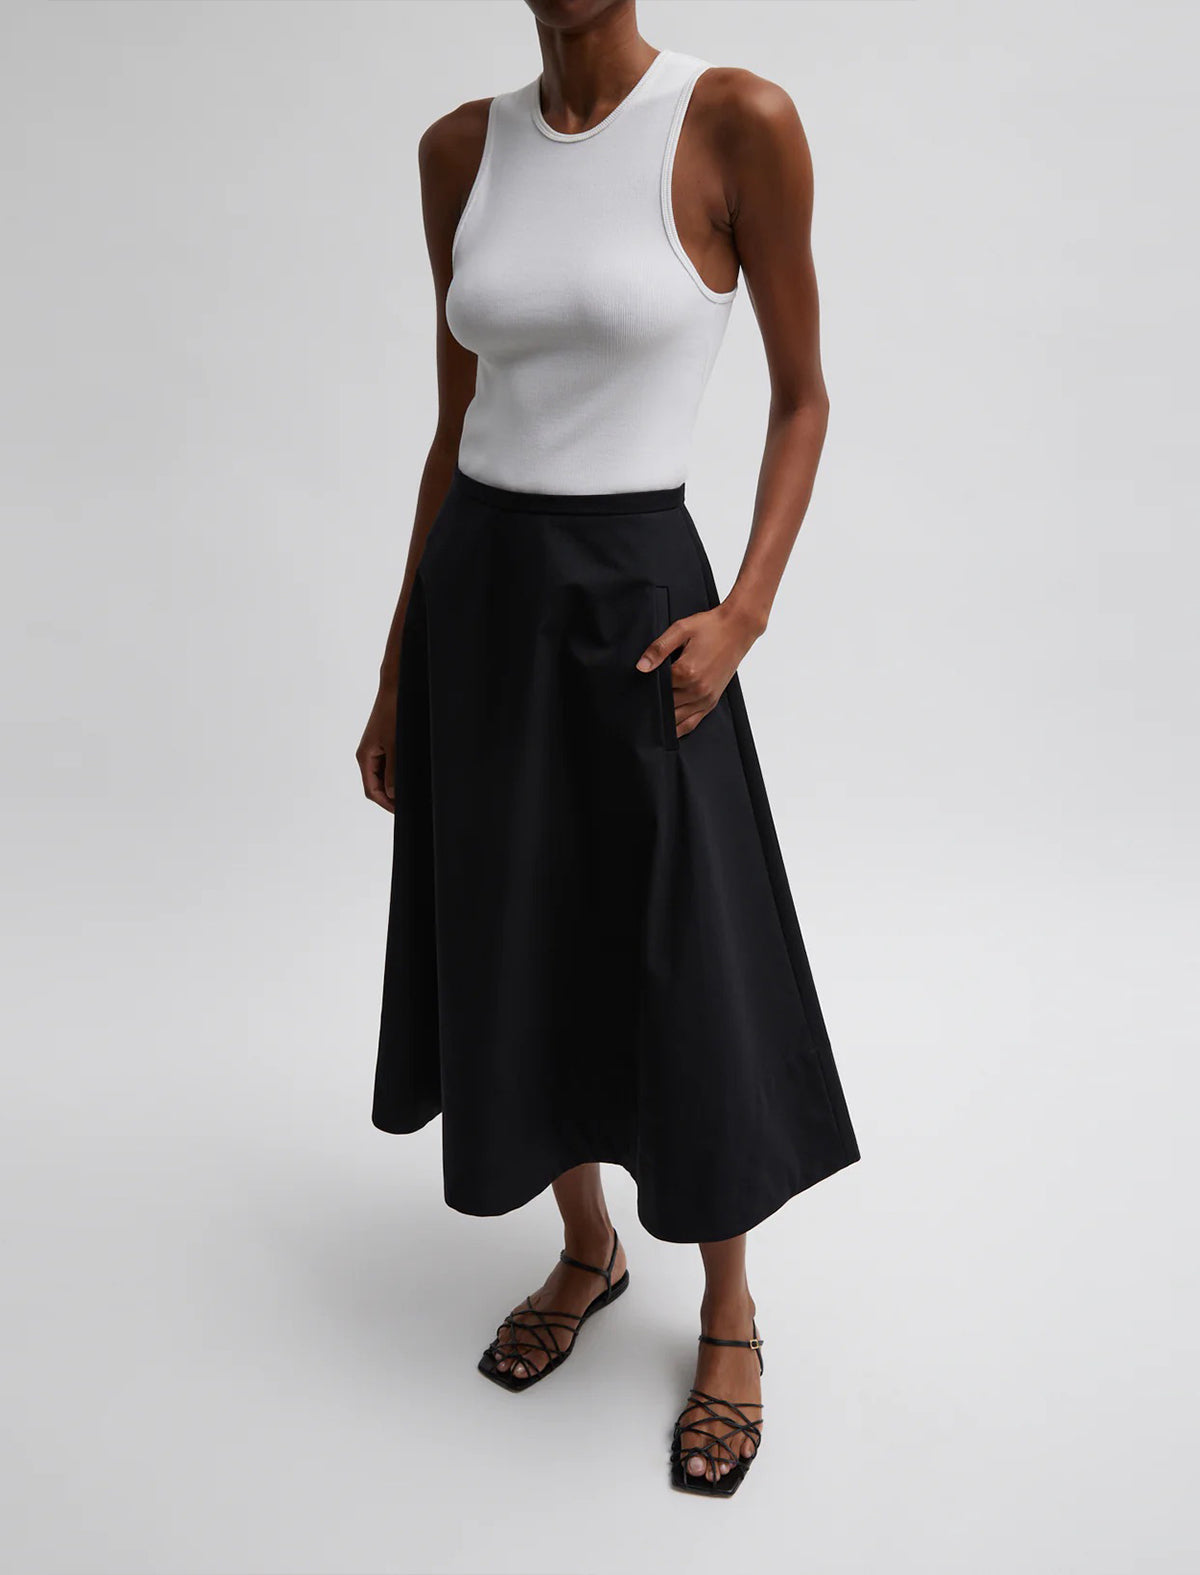 TIBI Bonded Luxe Twill Circle Skirt in Black